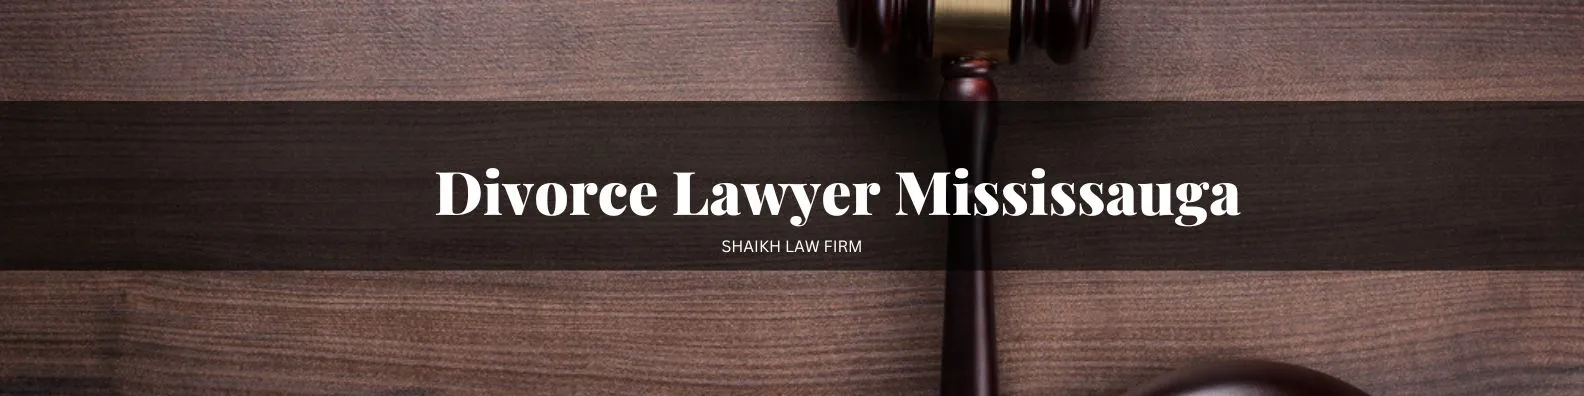 Divorce-Lawyer-Mississauga